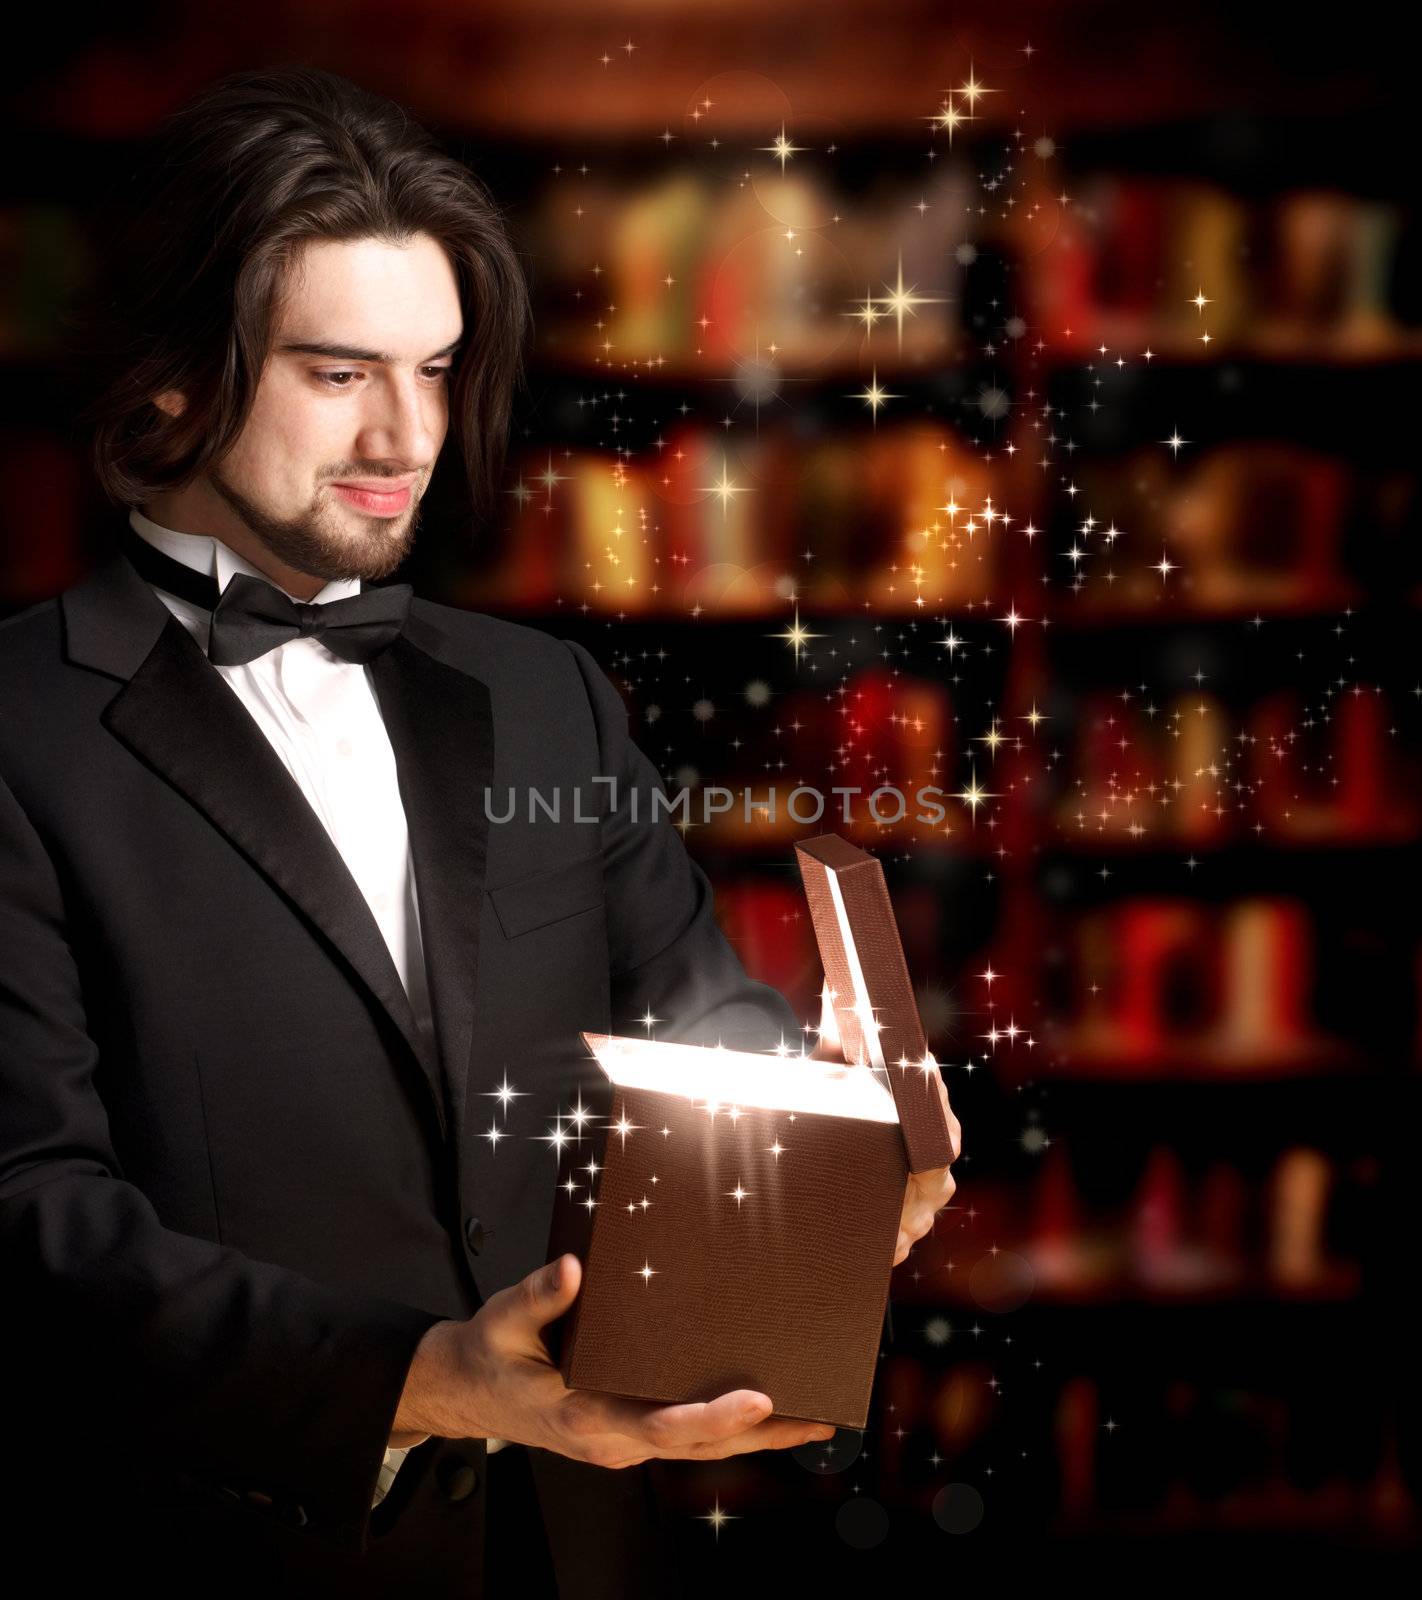 Man Opening a Gift Box by melpomene